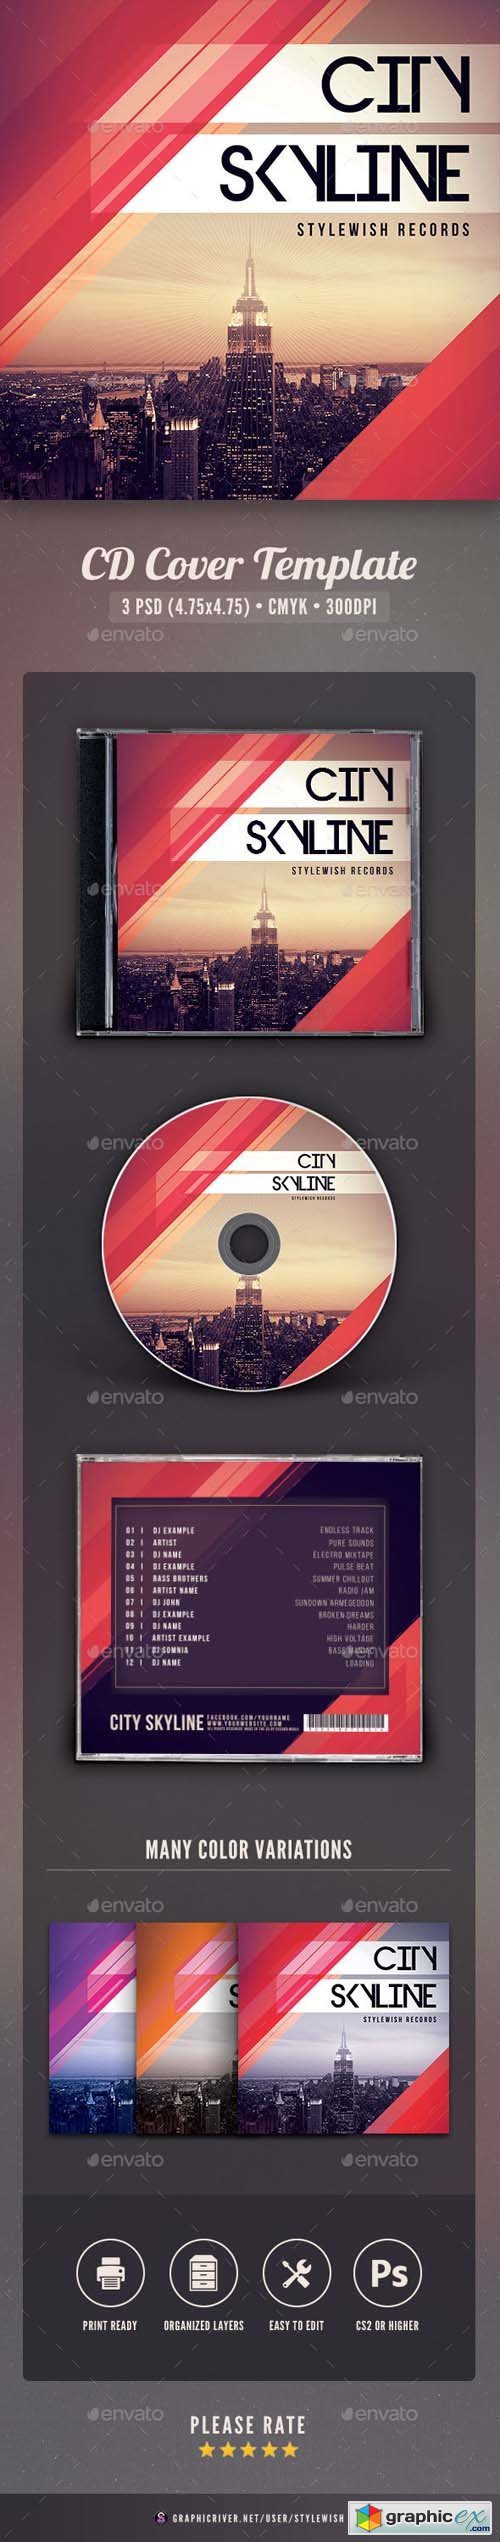 City Skyline CD Cover Artwork